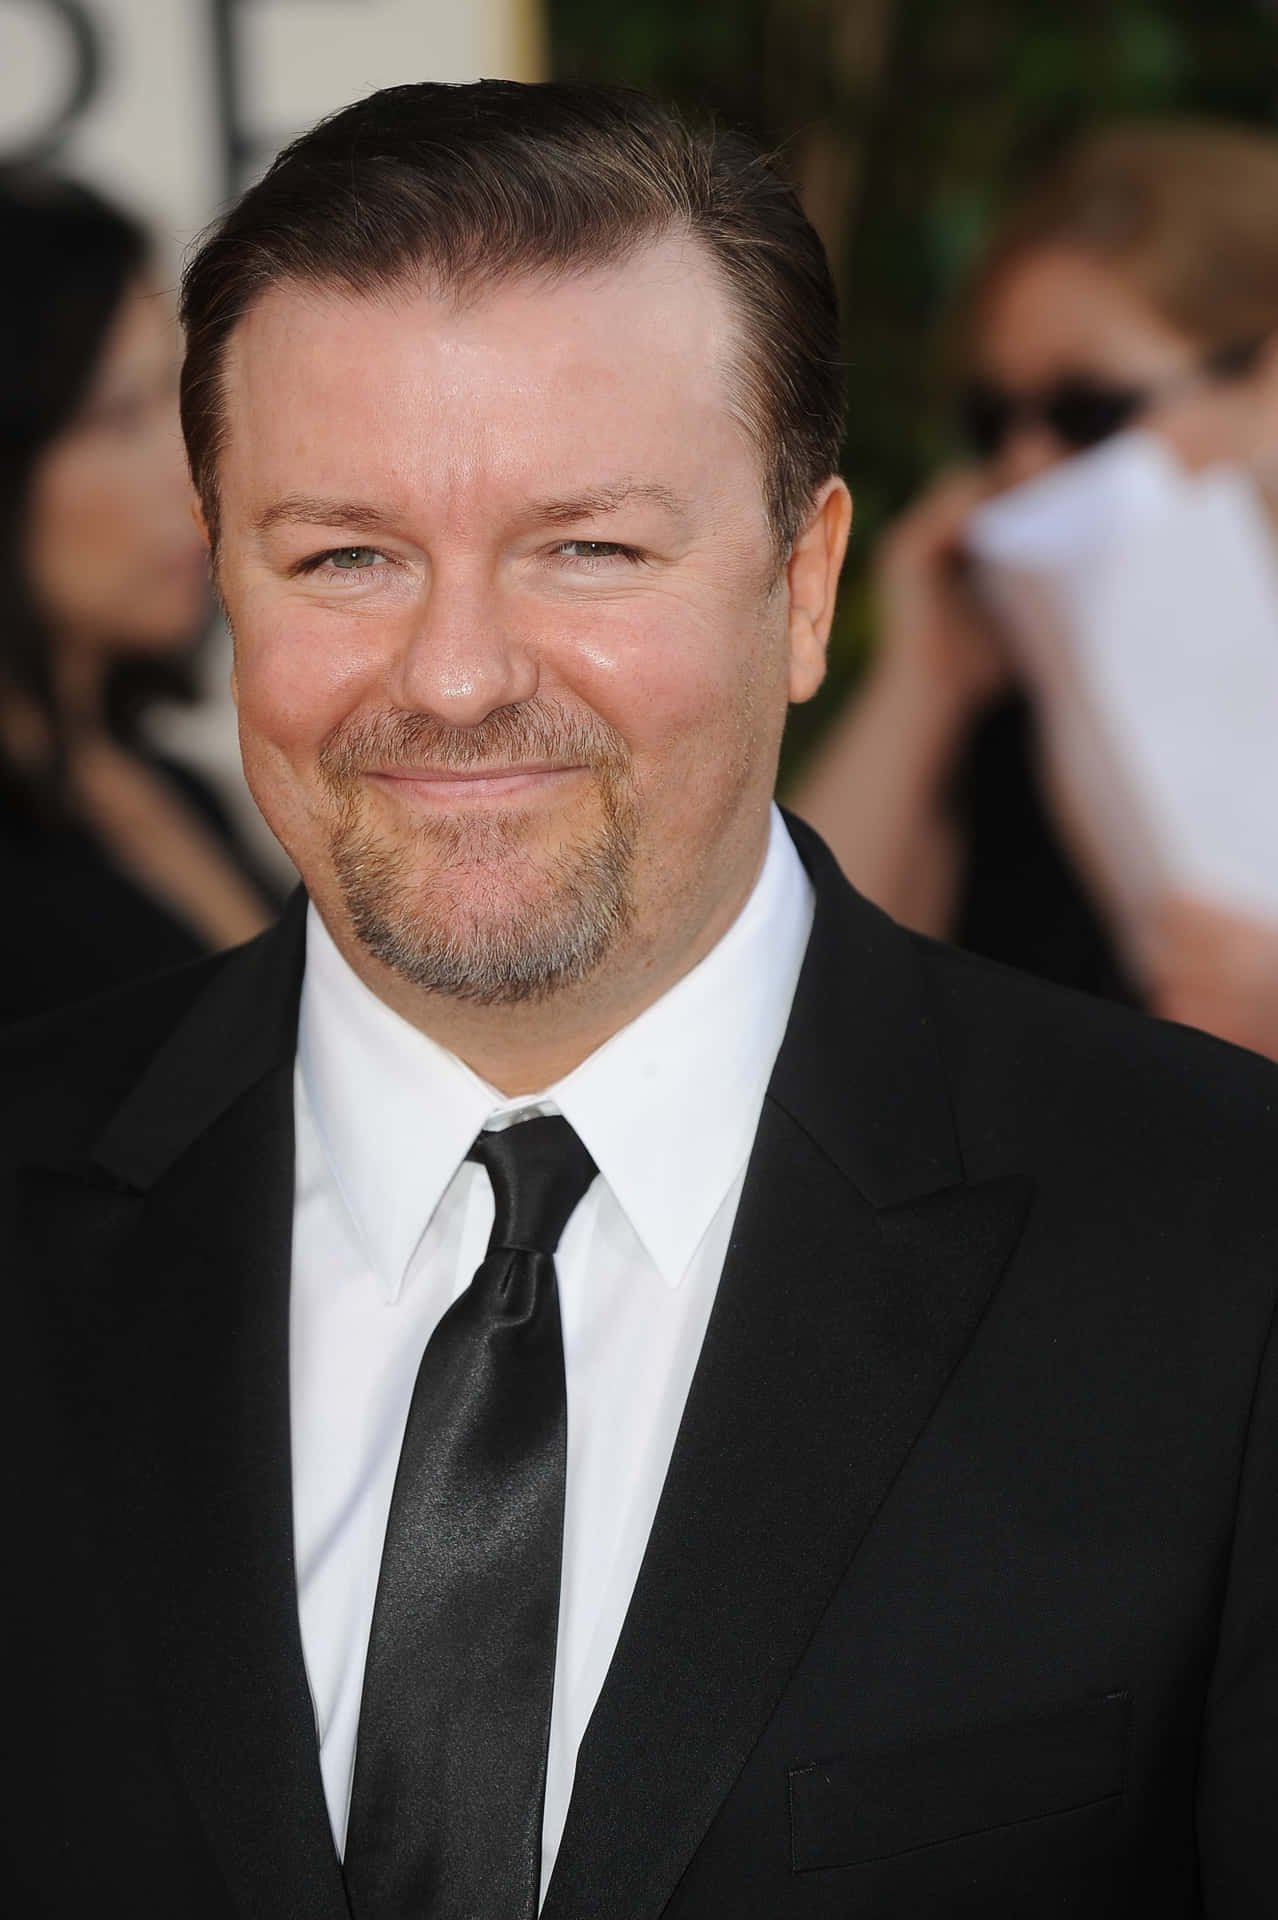 Award-winning British Comedian Ricky Gervais Wallpaper